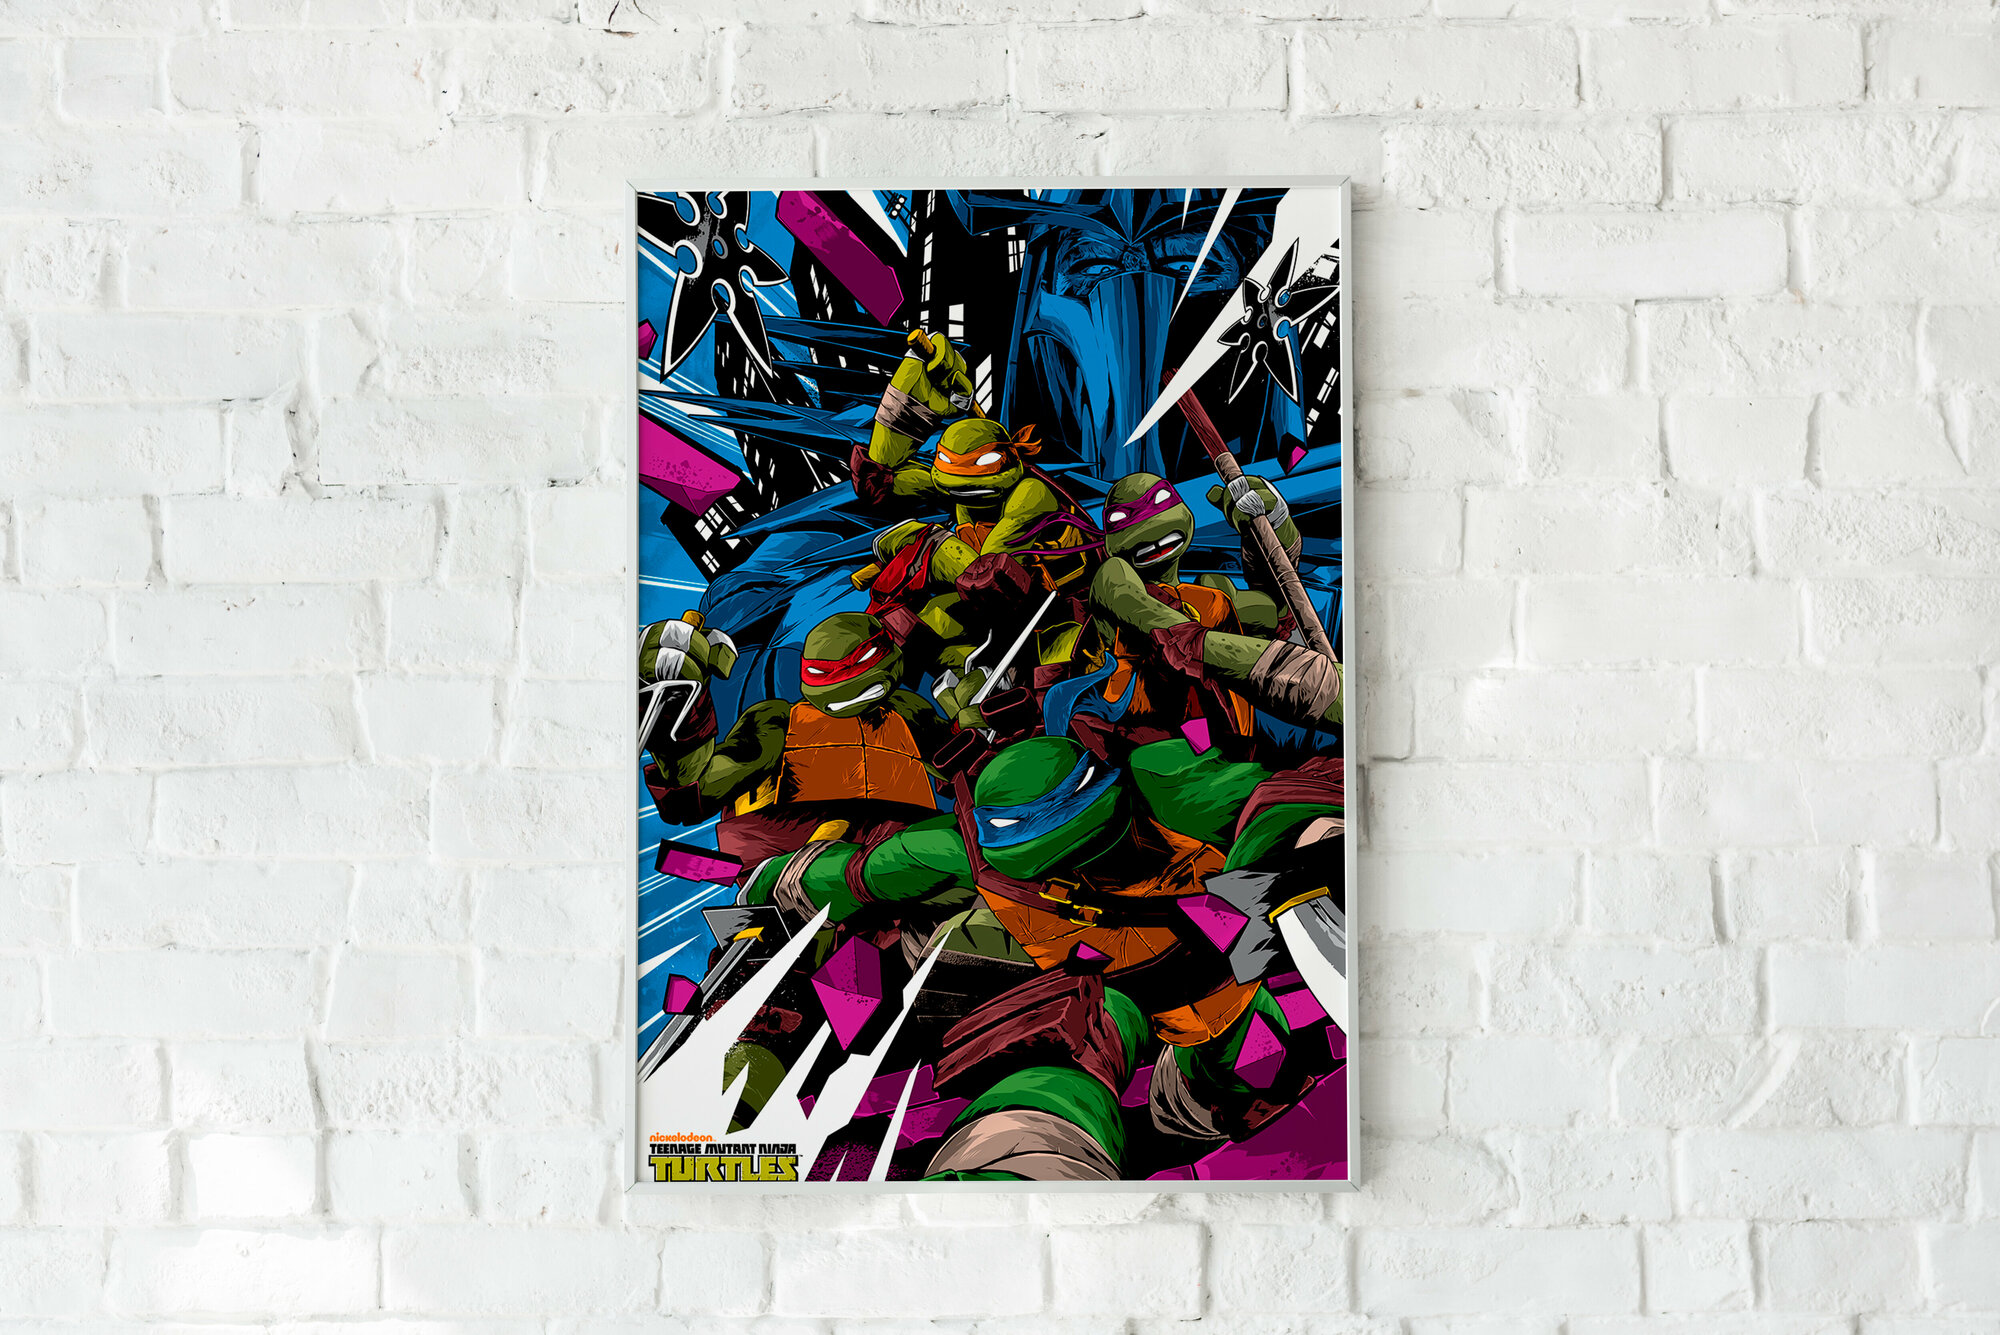 Плакат Черепашки-ниндзя/Teenage Mutant Ninja Turtles/ Плакат на стену 21х30 см / Постер формата А4